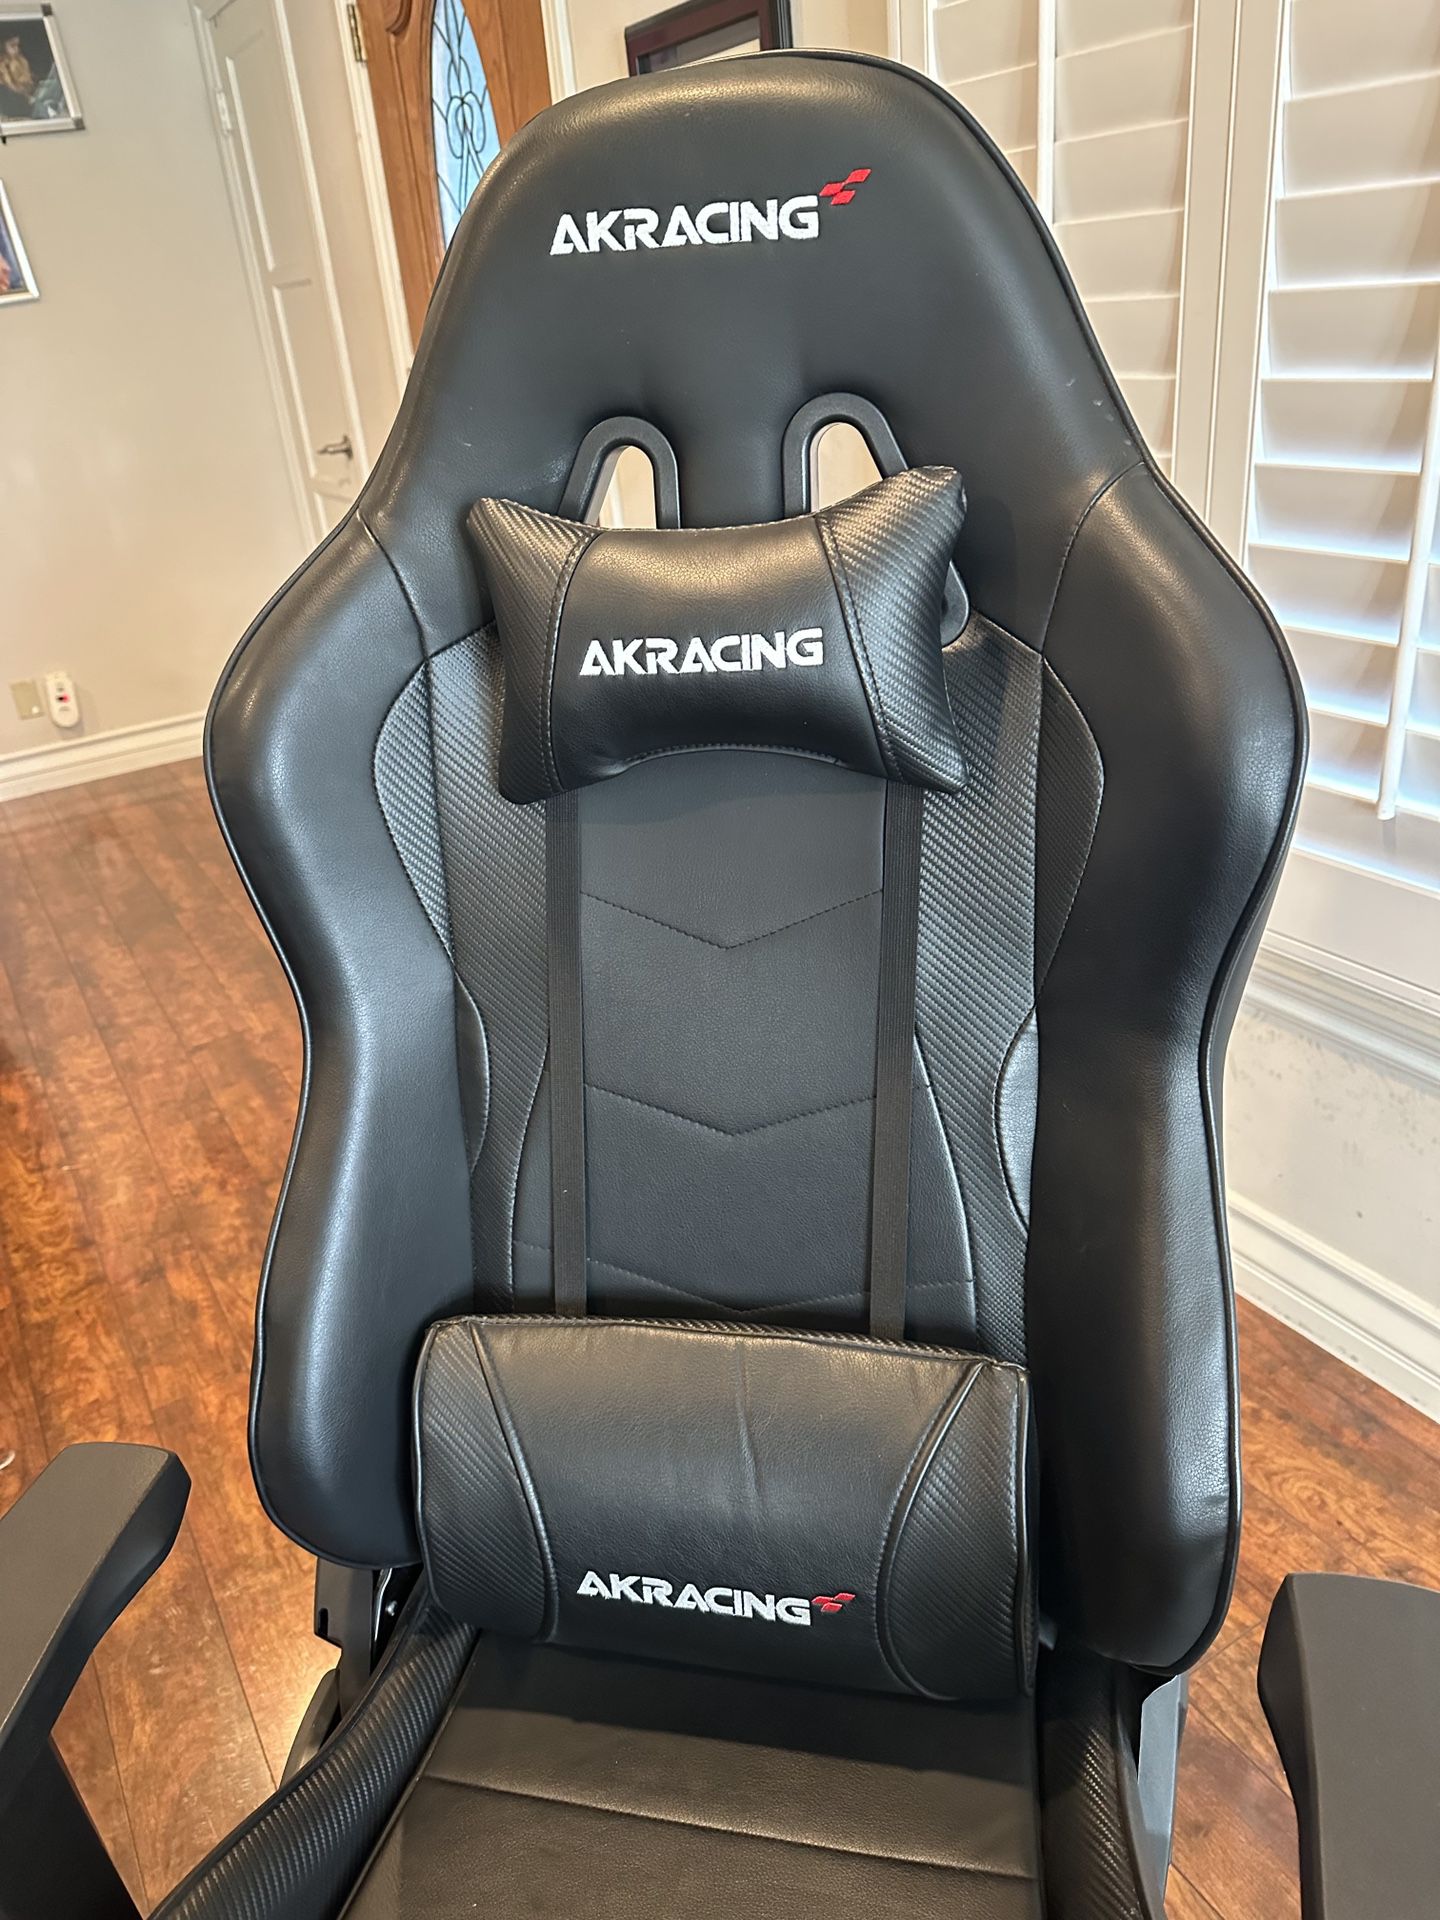 AK racing NITRO gaming chair carbon black. High quality materials